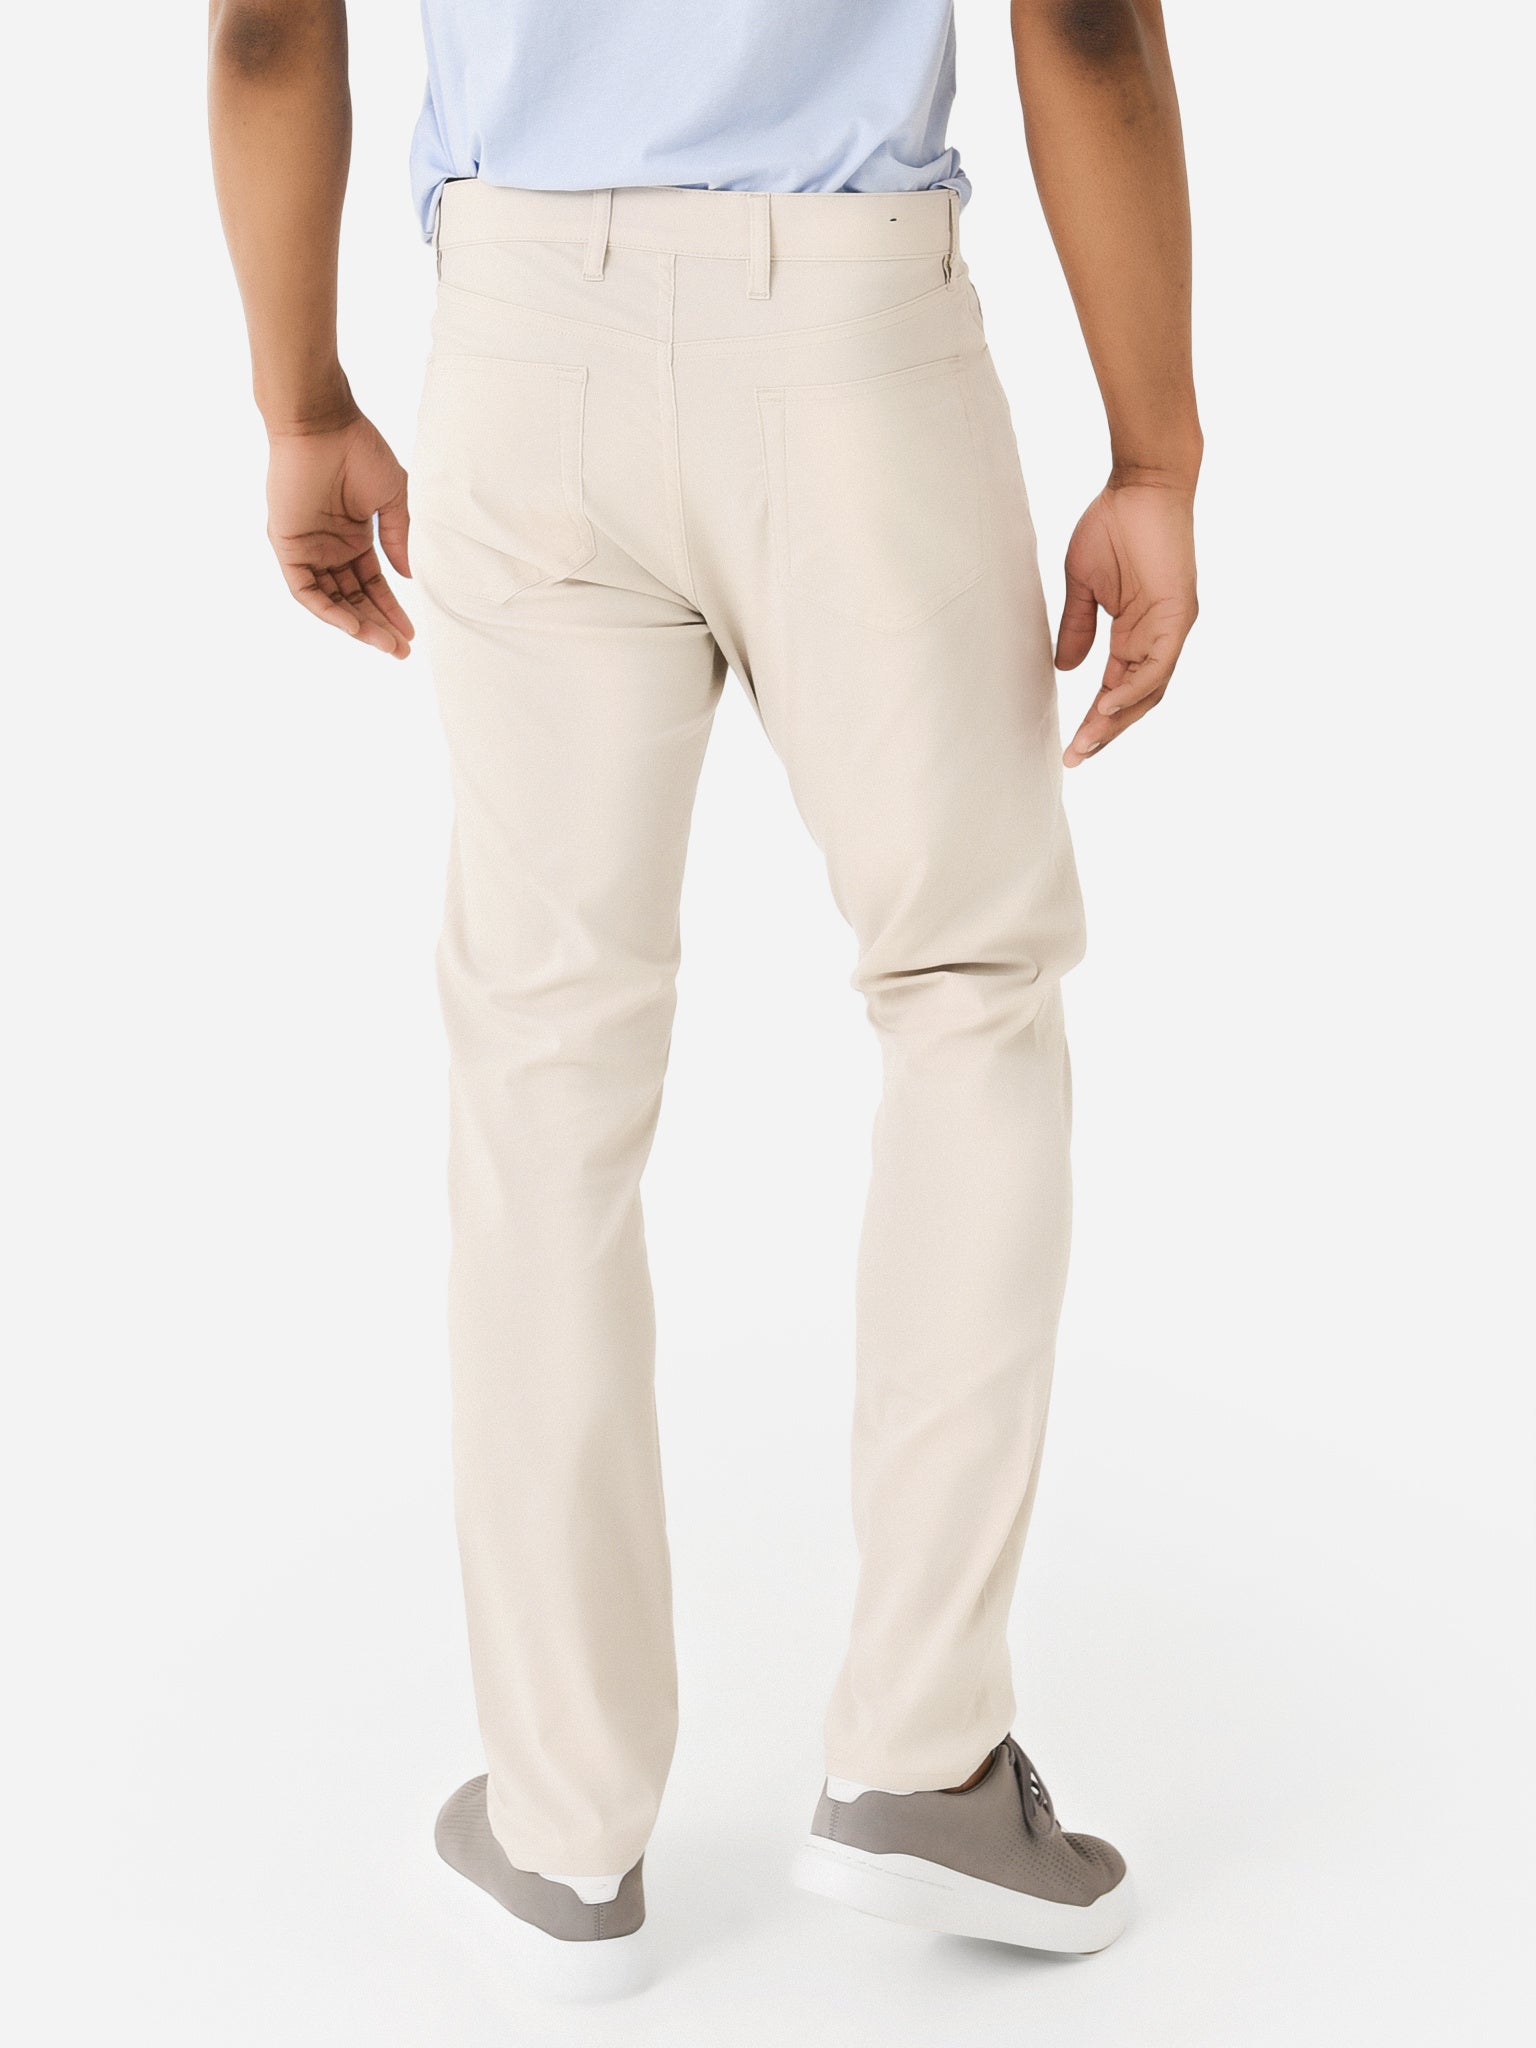 Cotton Pant Trousers | Men Trousers Pants | Casual Pants Men | Men Cotton  Pant - Brand - Aliexpress